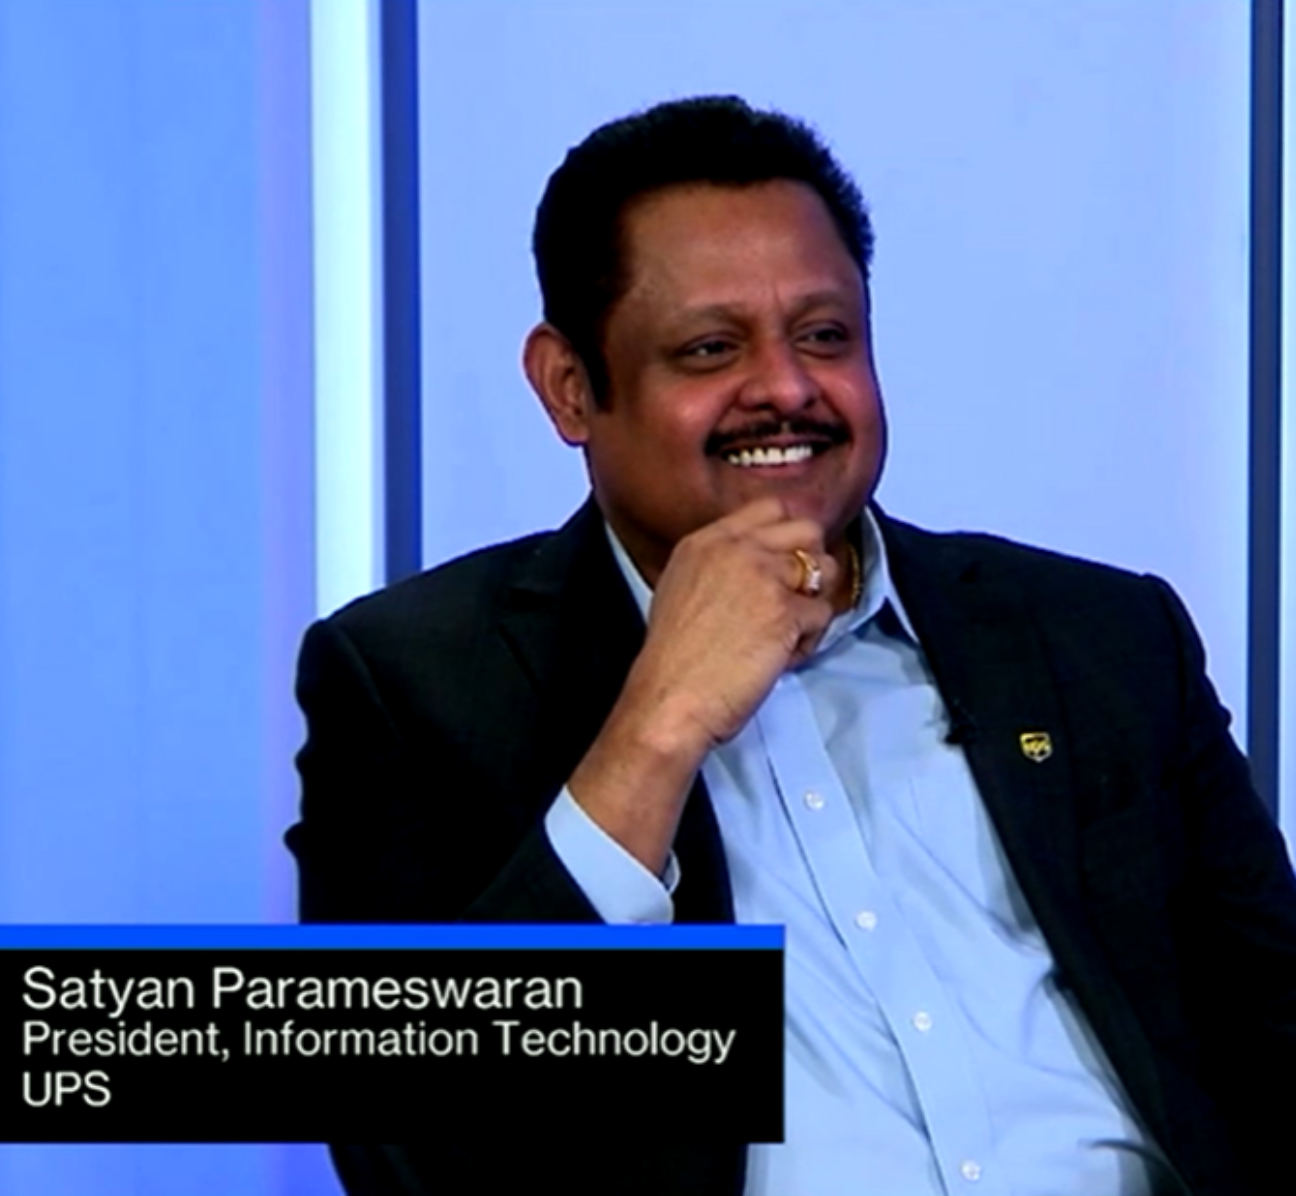 Picture of Satyan Parameswaran, President, Information Technology at UPS